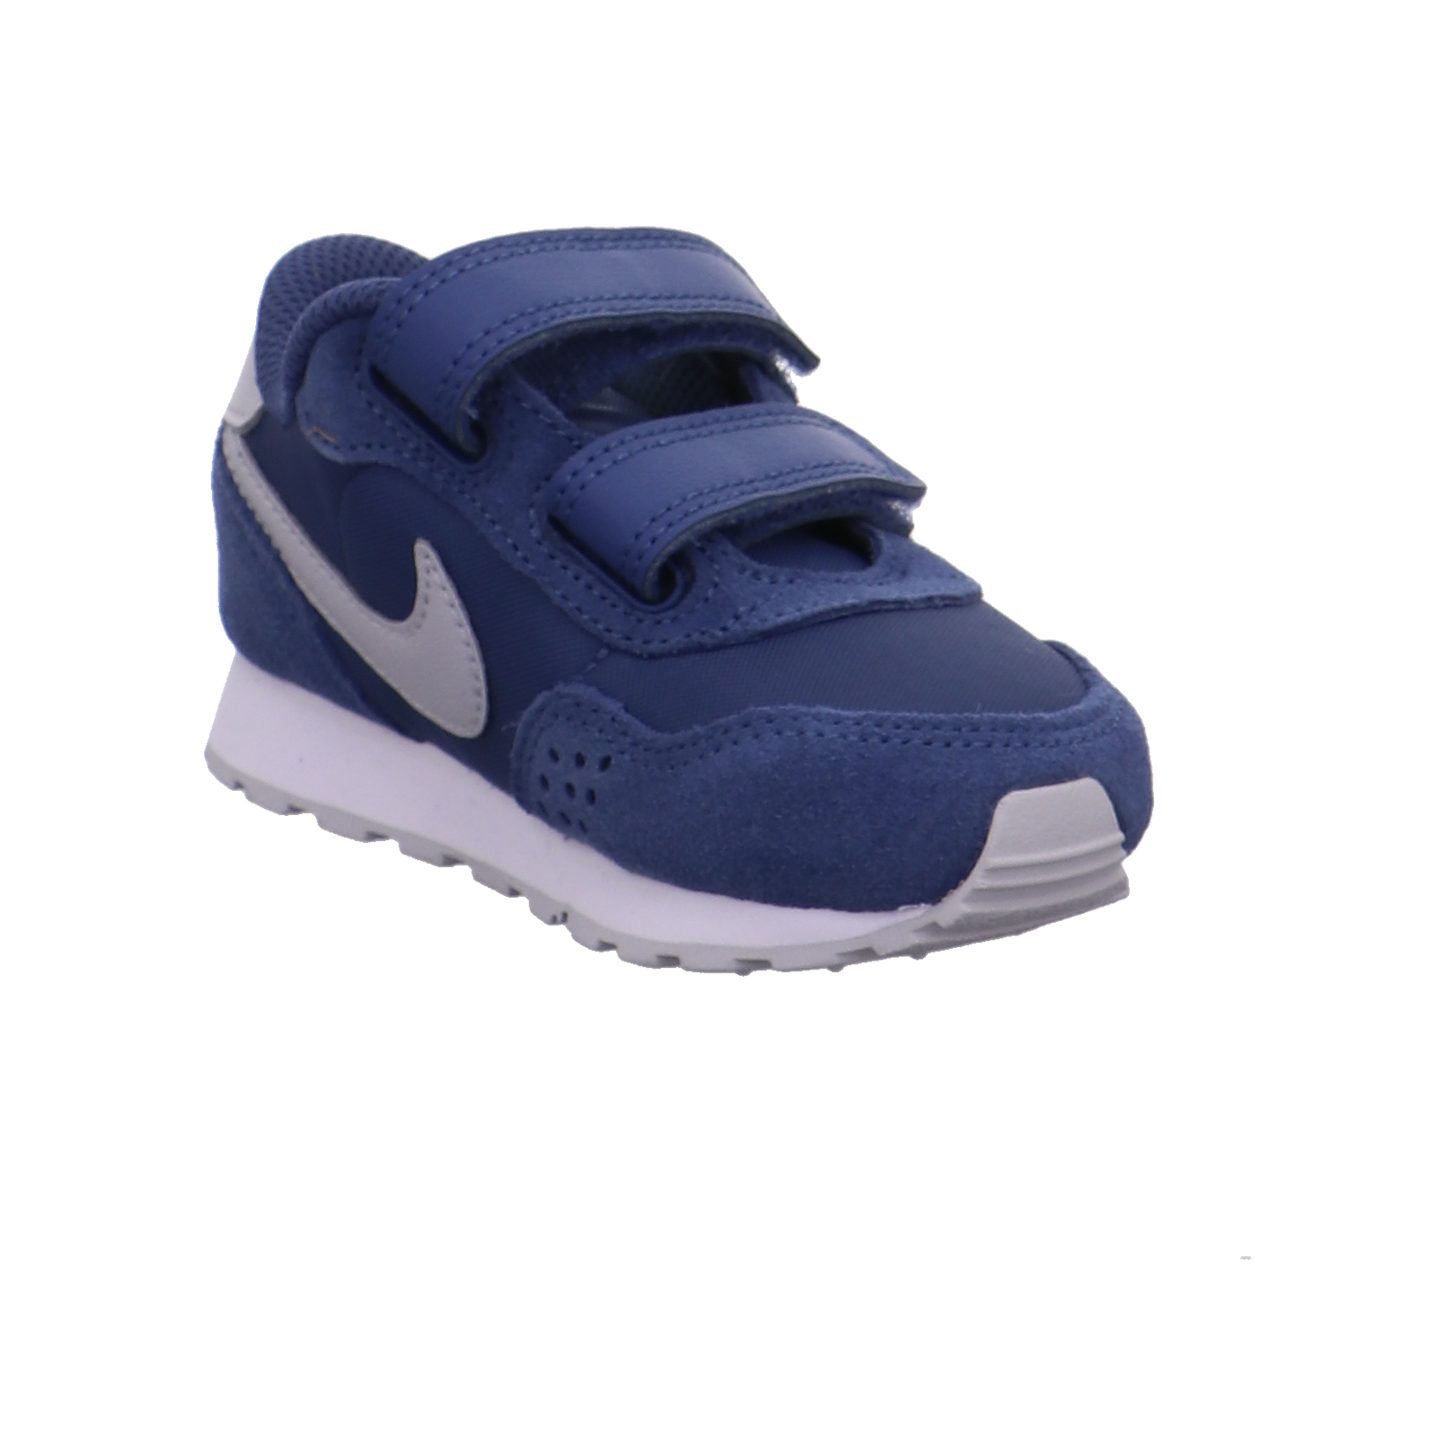 Nike Halbschuhe blau kombi Bild7